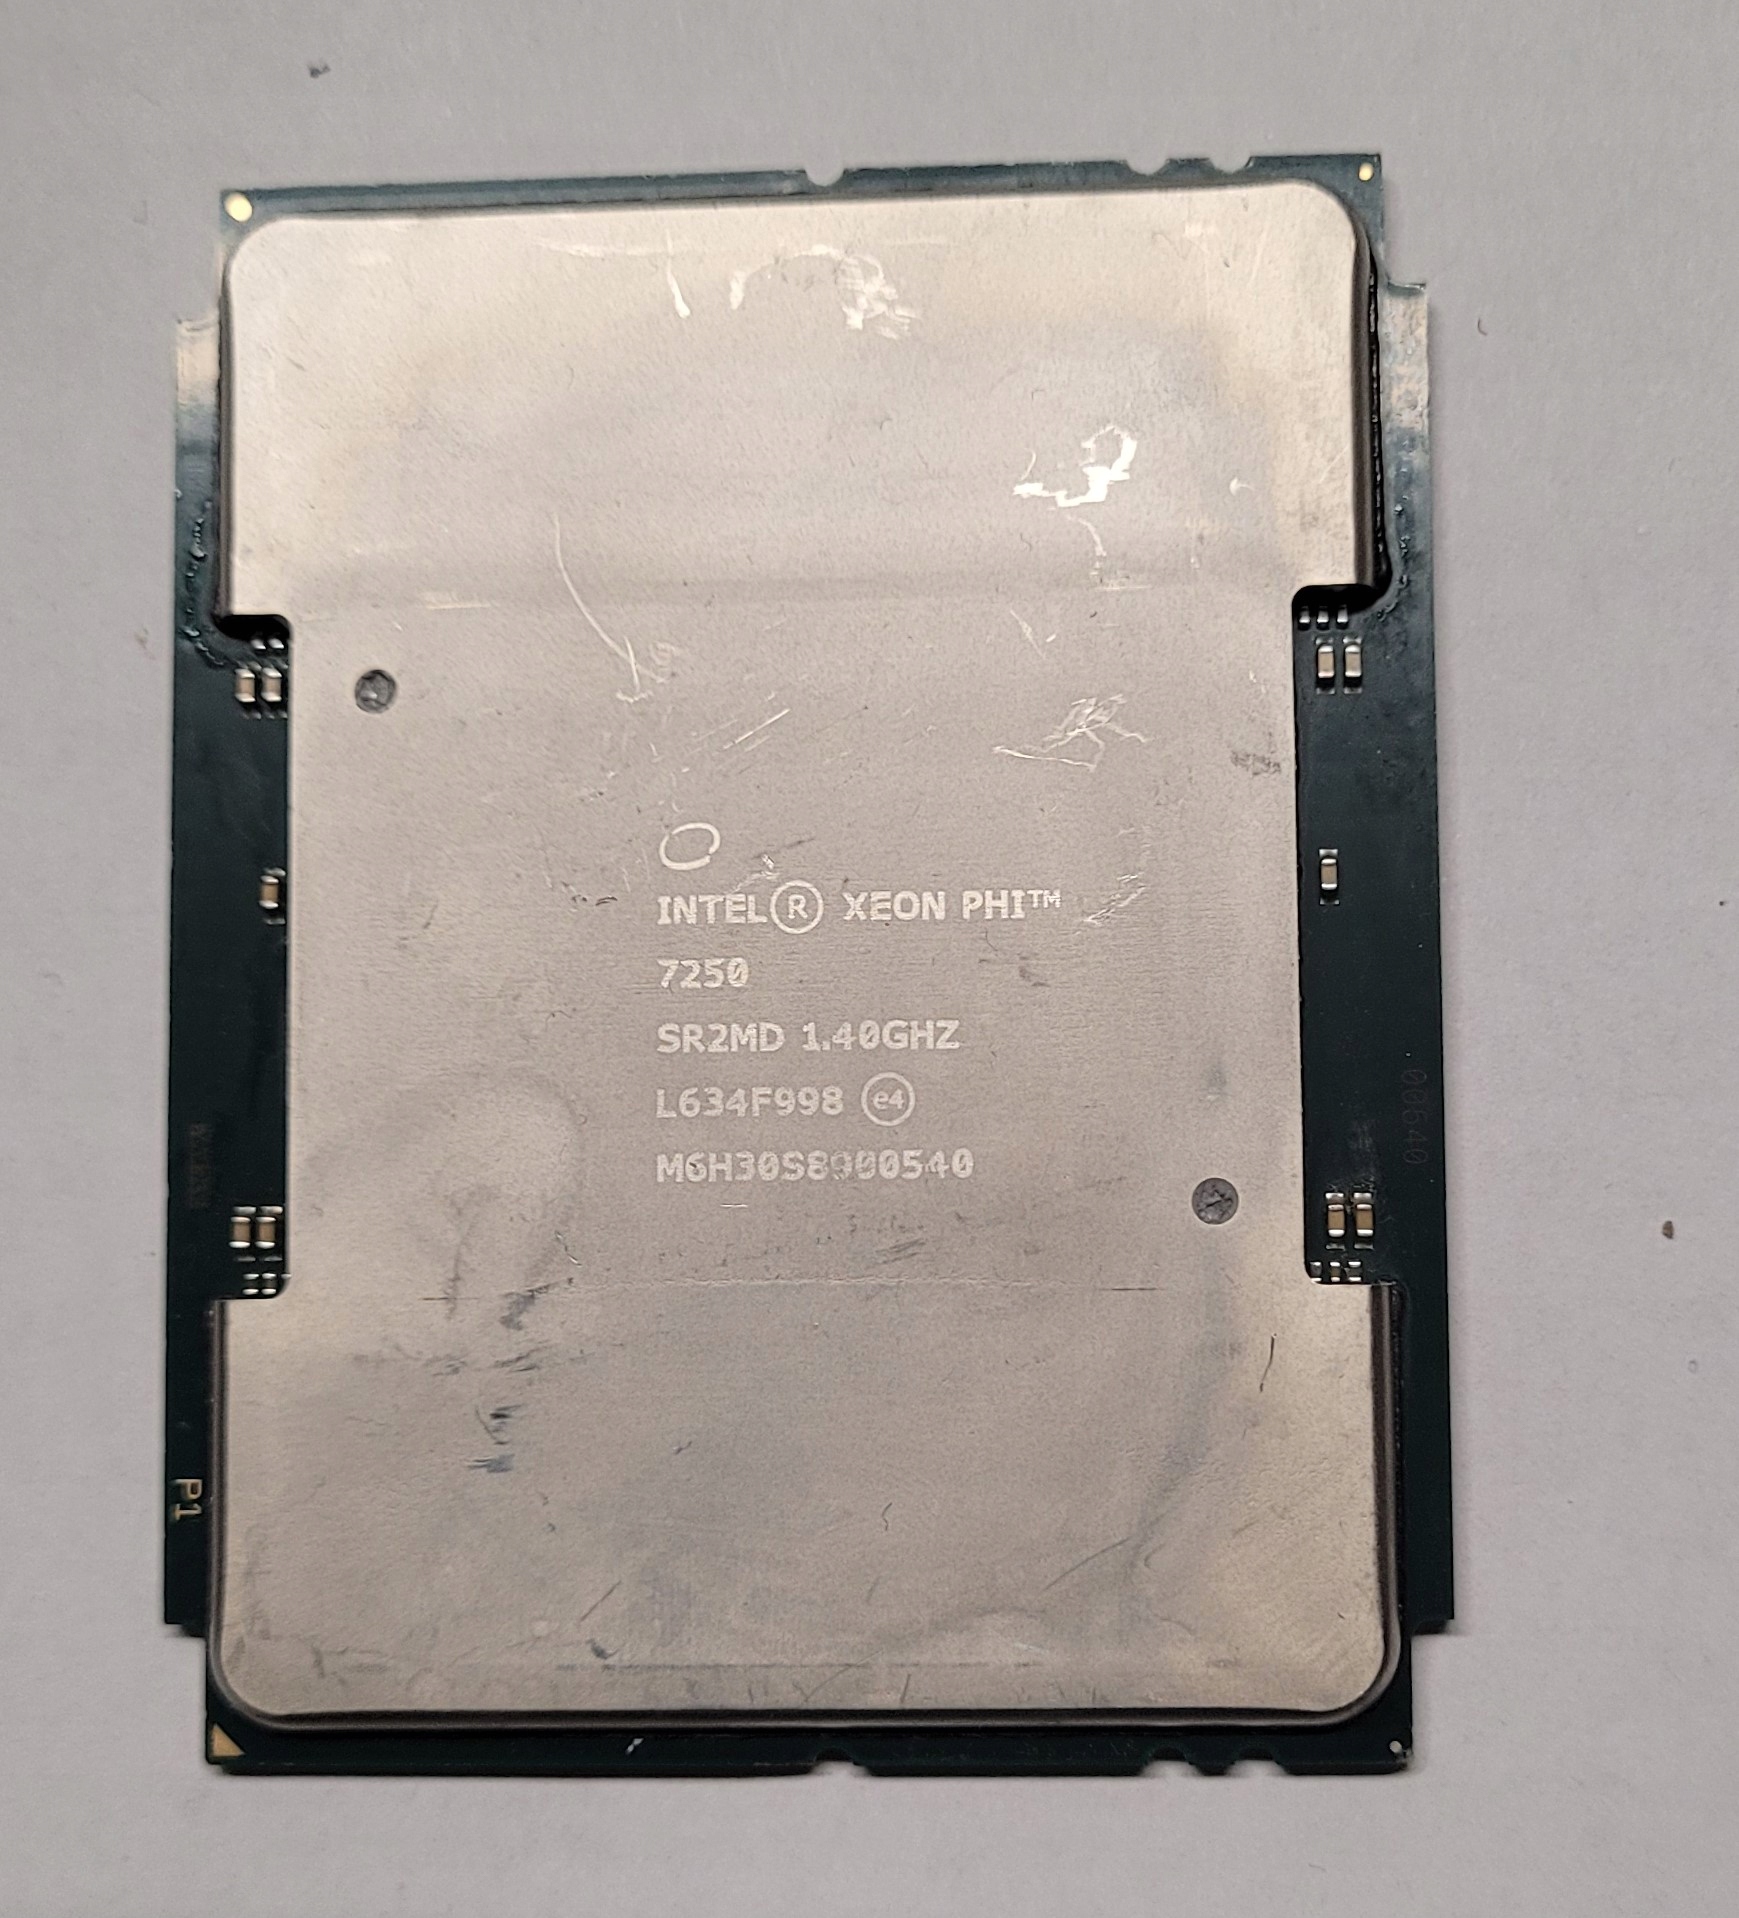 Procesor Intel Xeon PHI 7250 1,40GHZ SVLCLGA3647 - Sklep, Opinie, Cena w  Allegro.pl